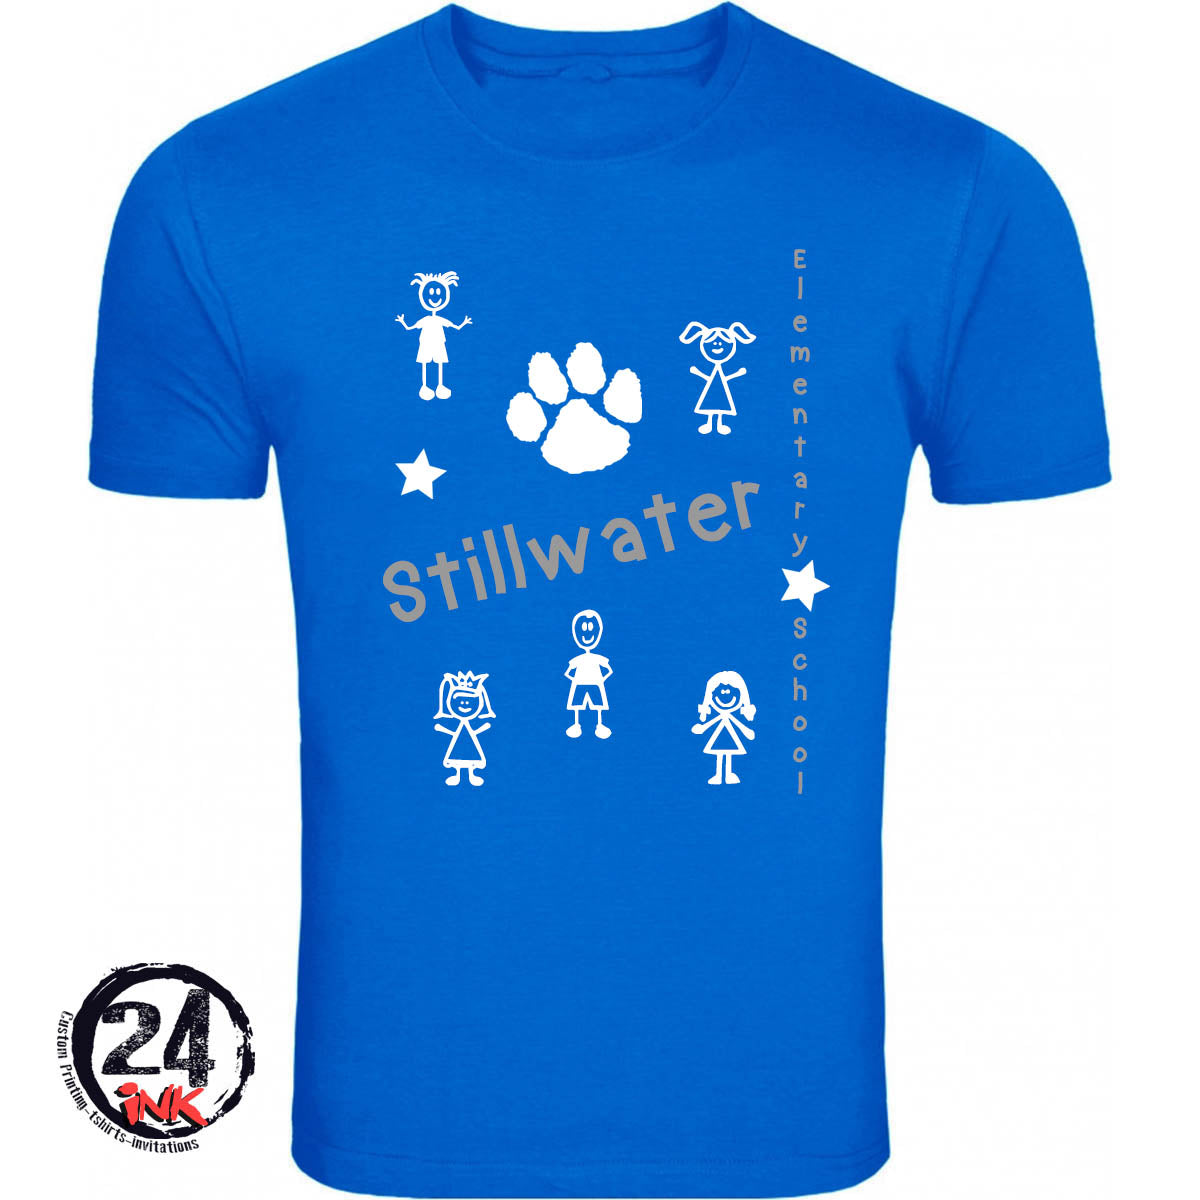 Stillwater People T-Shirt